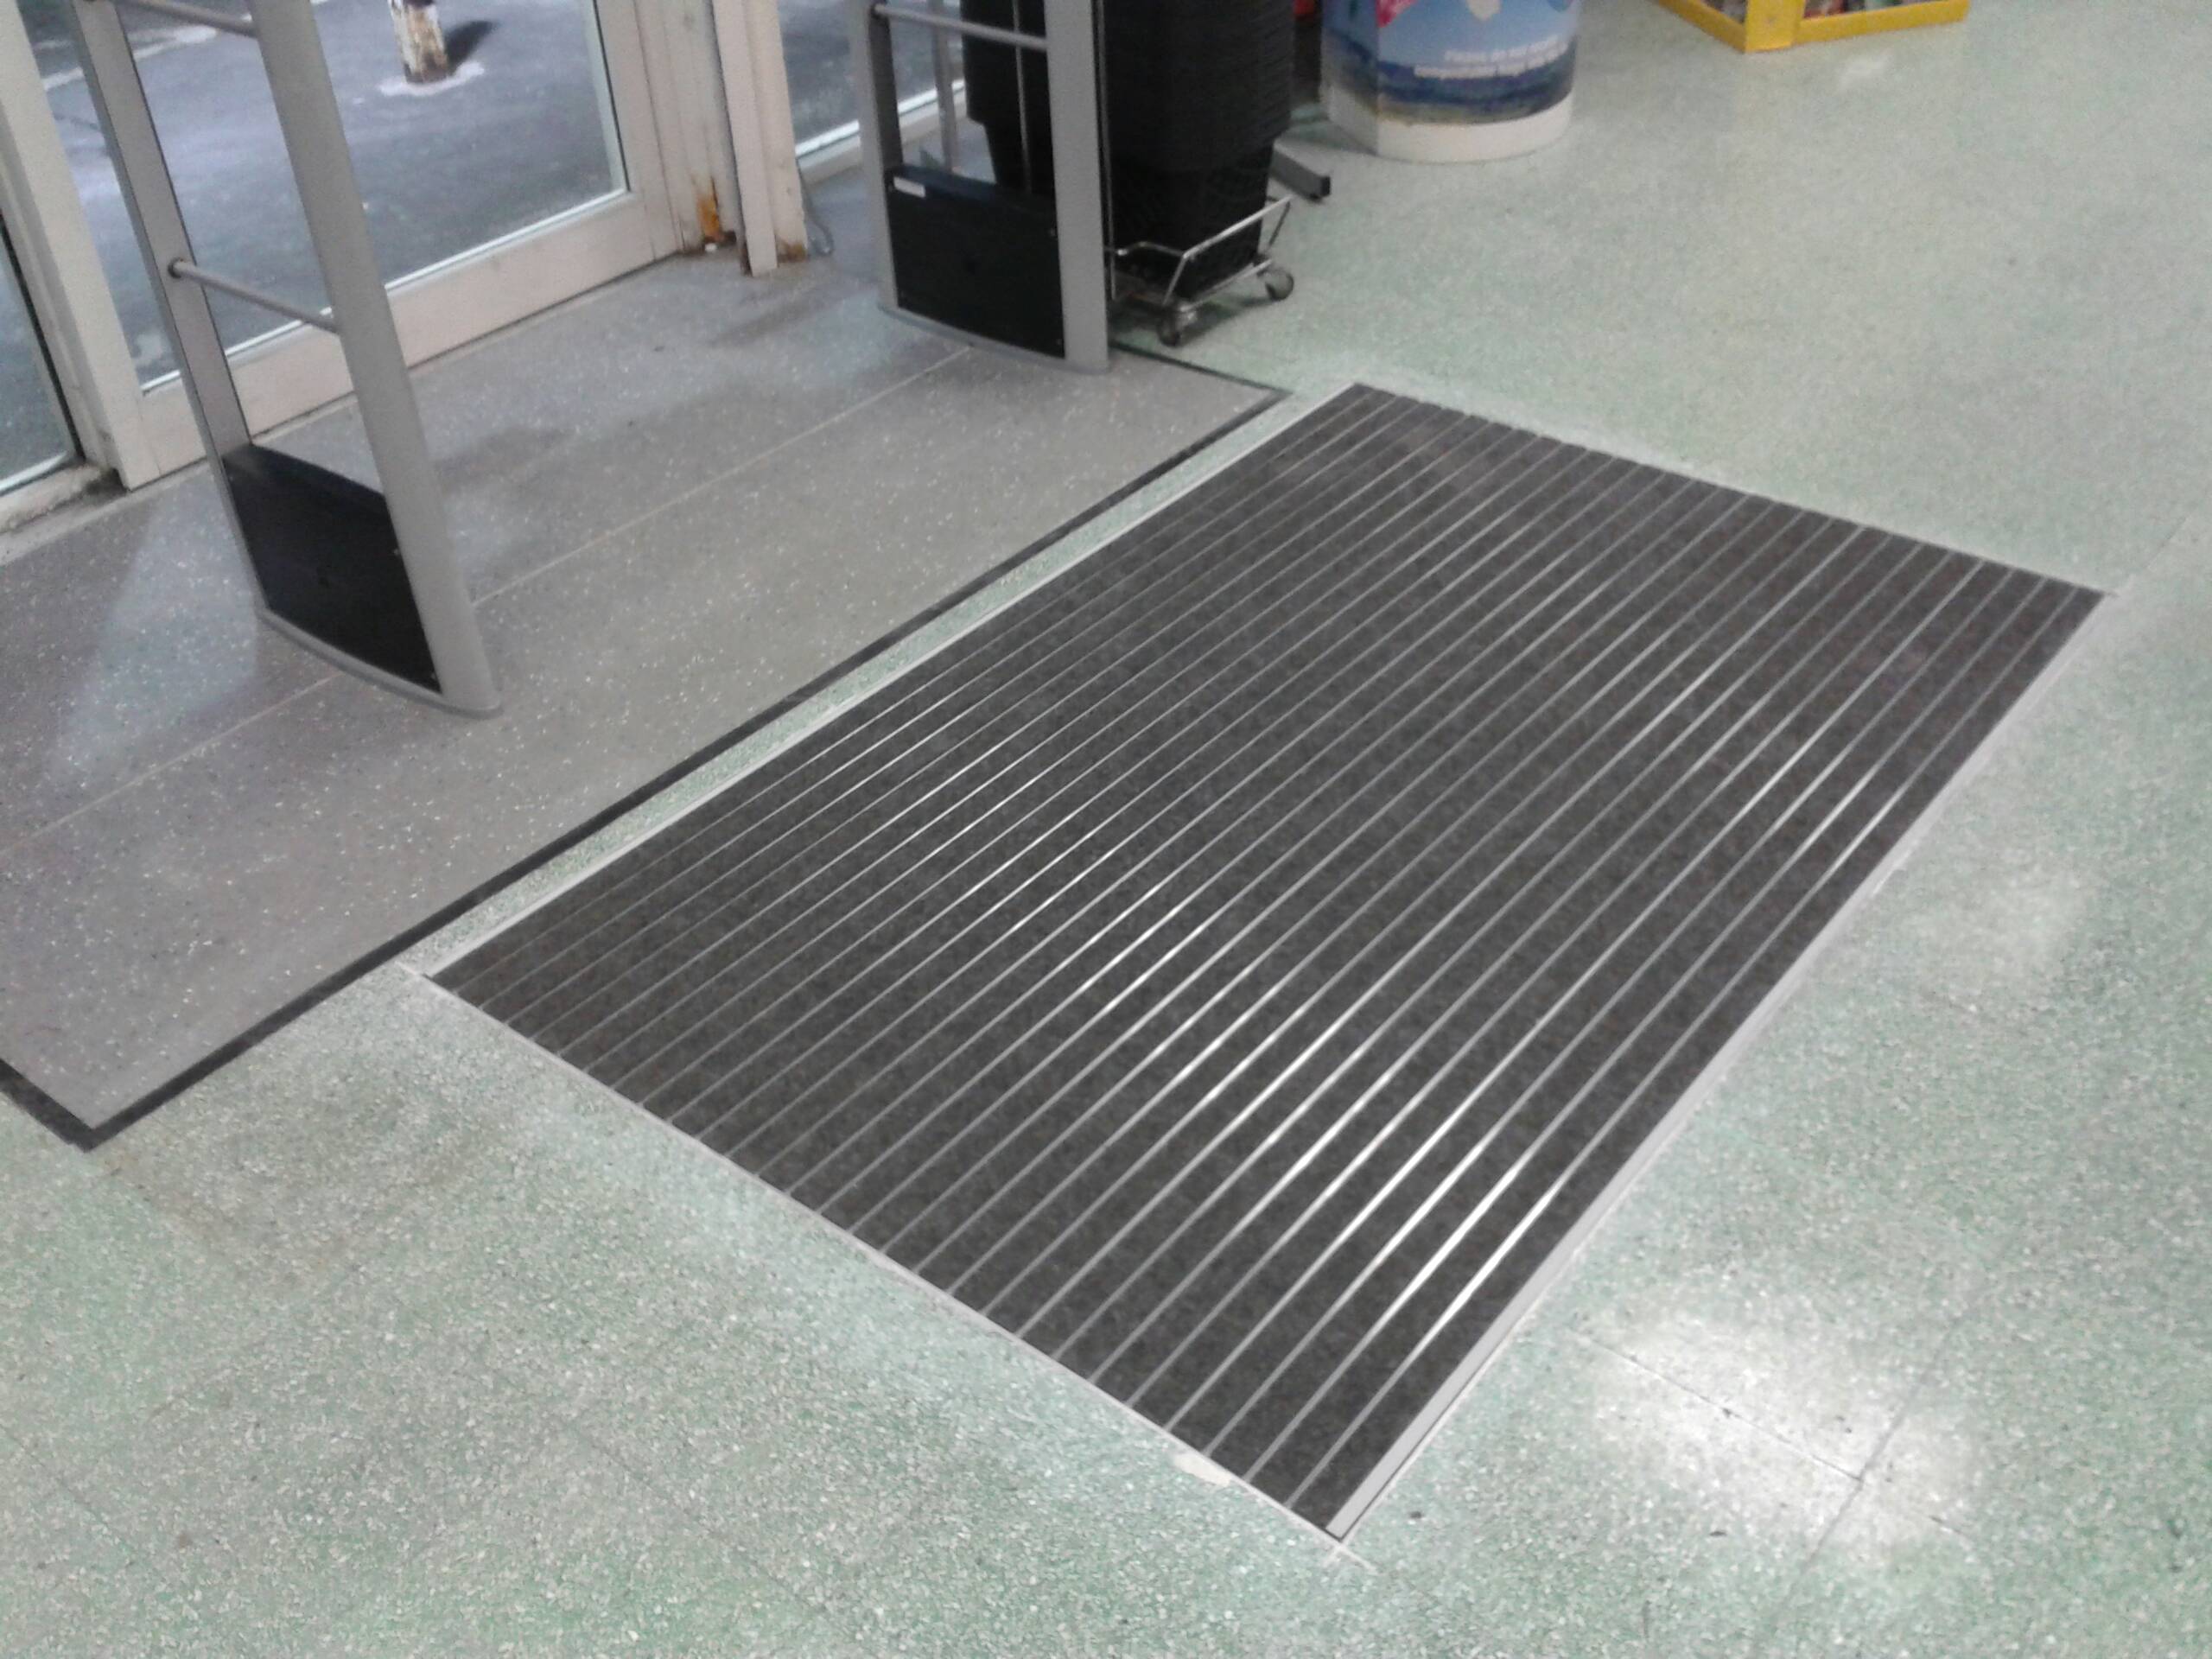 Surewalk Stratos matwell entrance matting system Retail Store